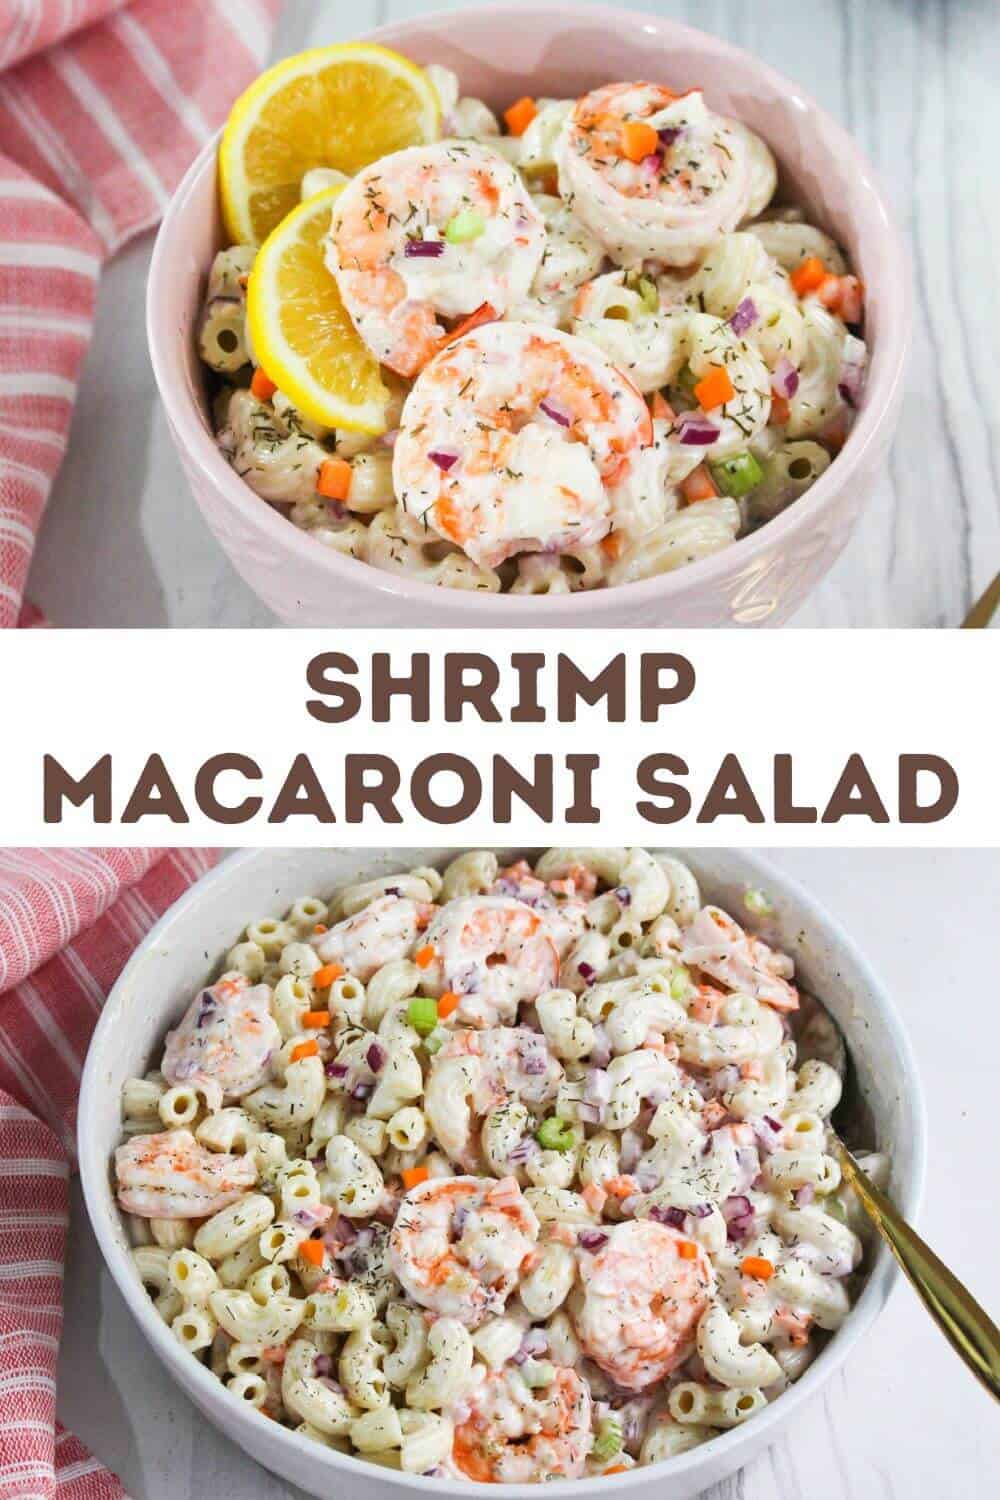 Shrimp macaroni salad in a bowl.